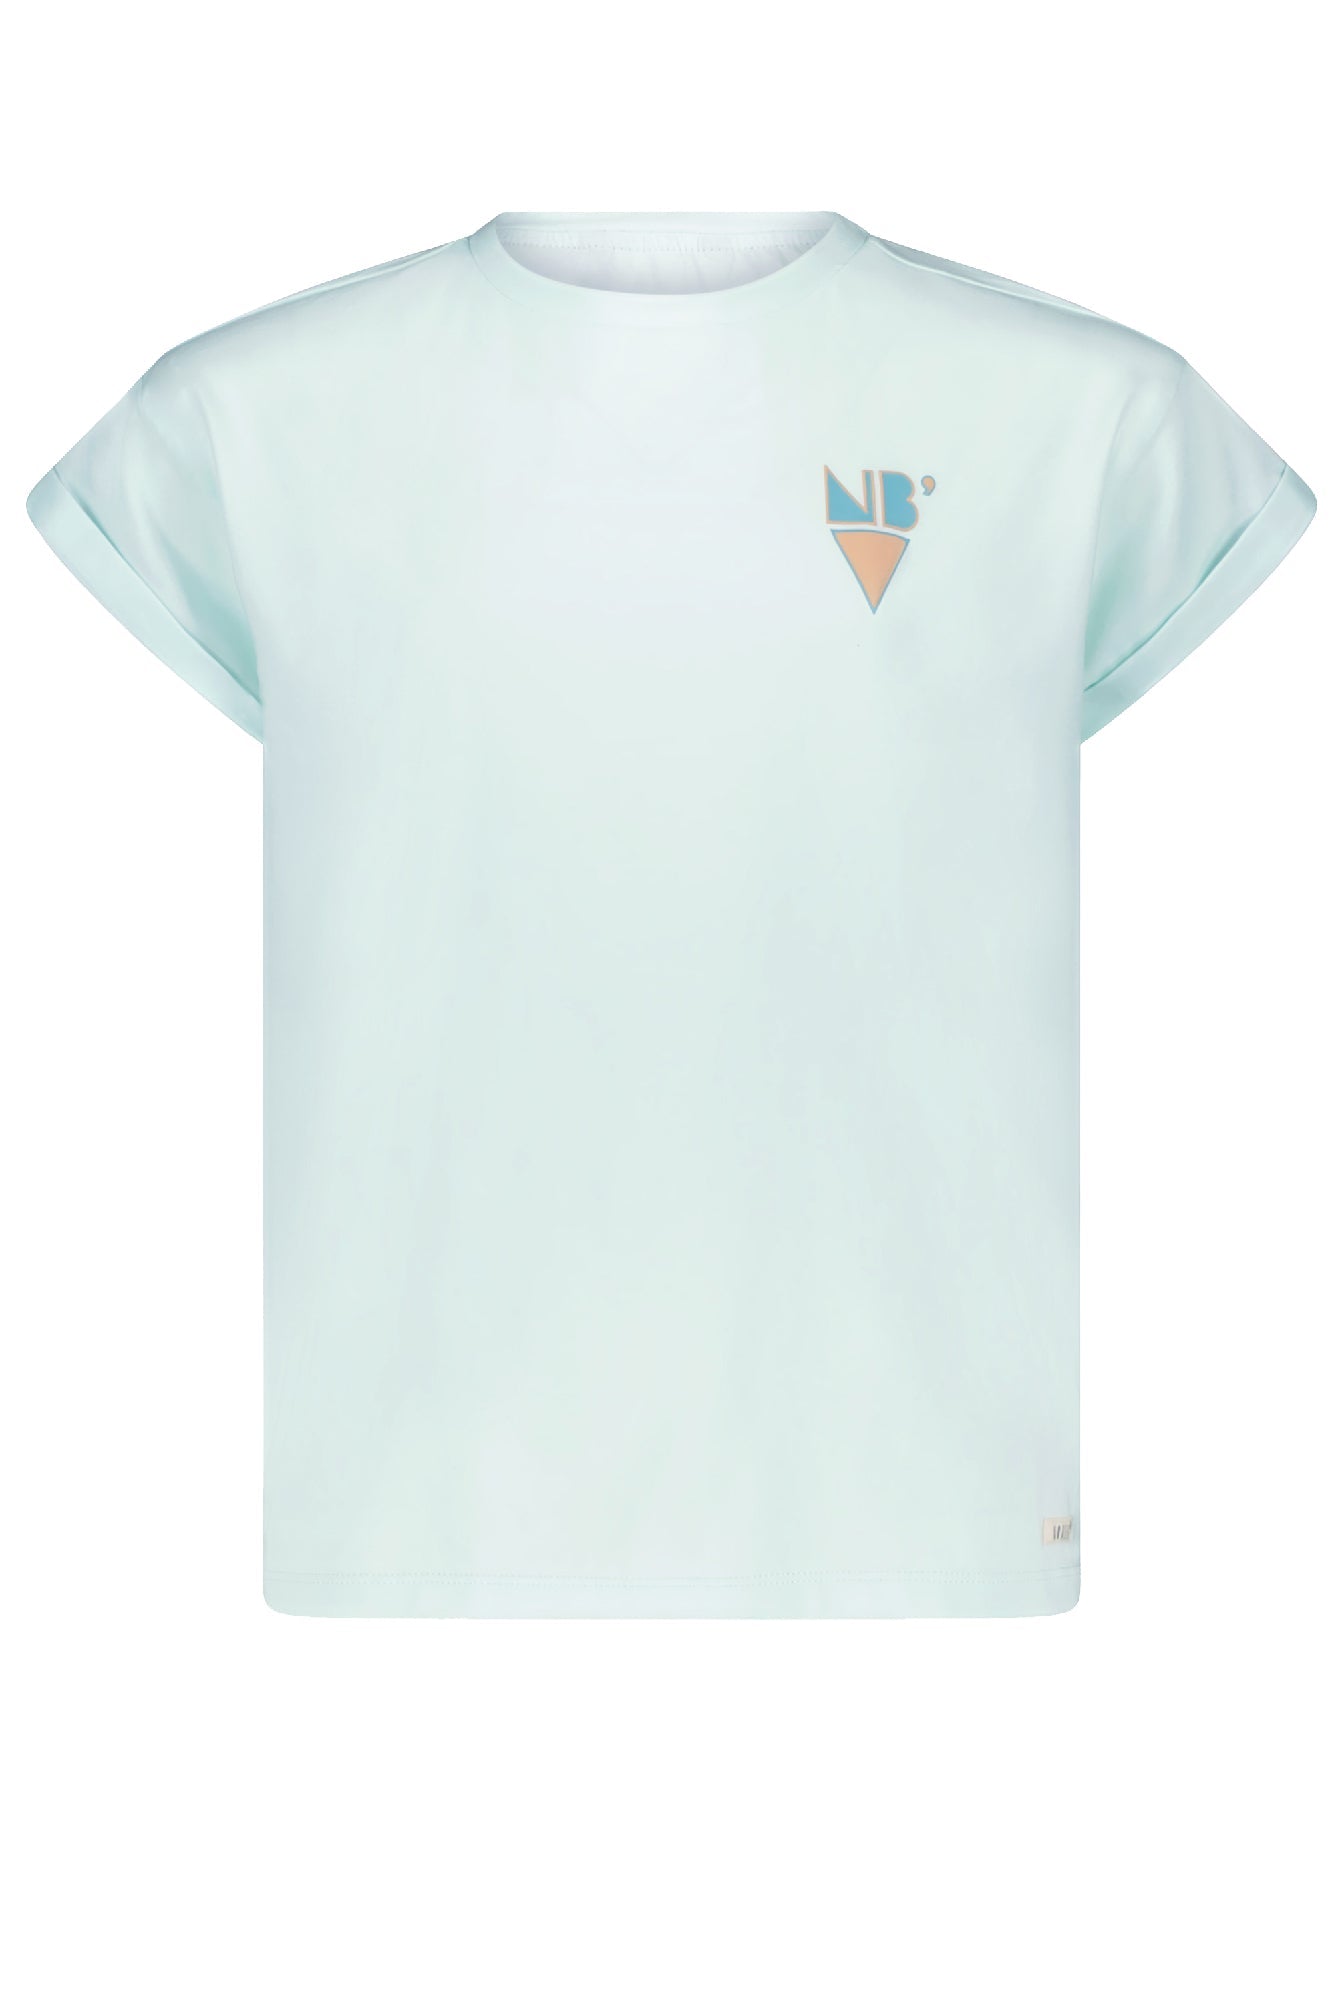 Meisjes Kasis crew neck tshirt s/sl with print LOVE PEACE & YOU van NoBell in de kleur Spa Blue in maat 170-176.